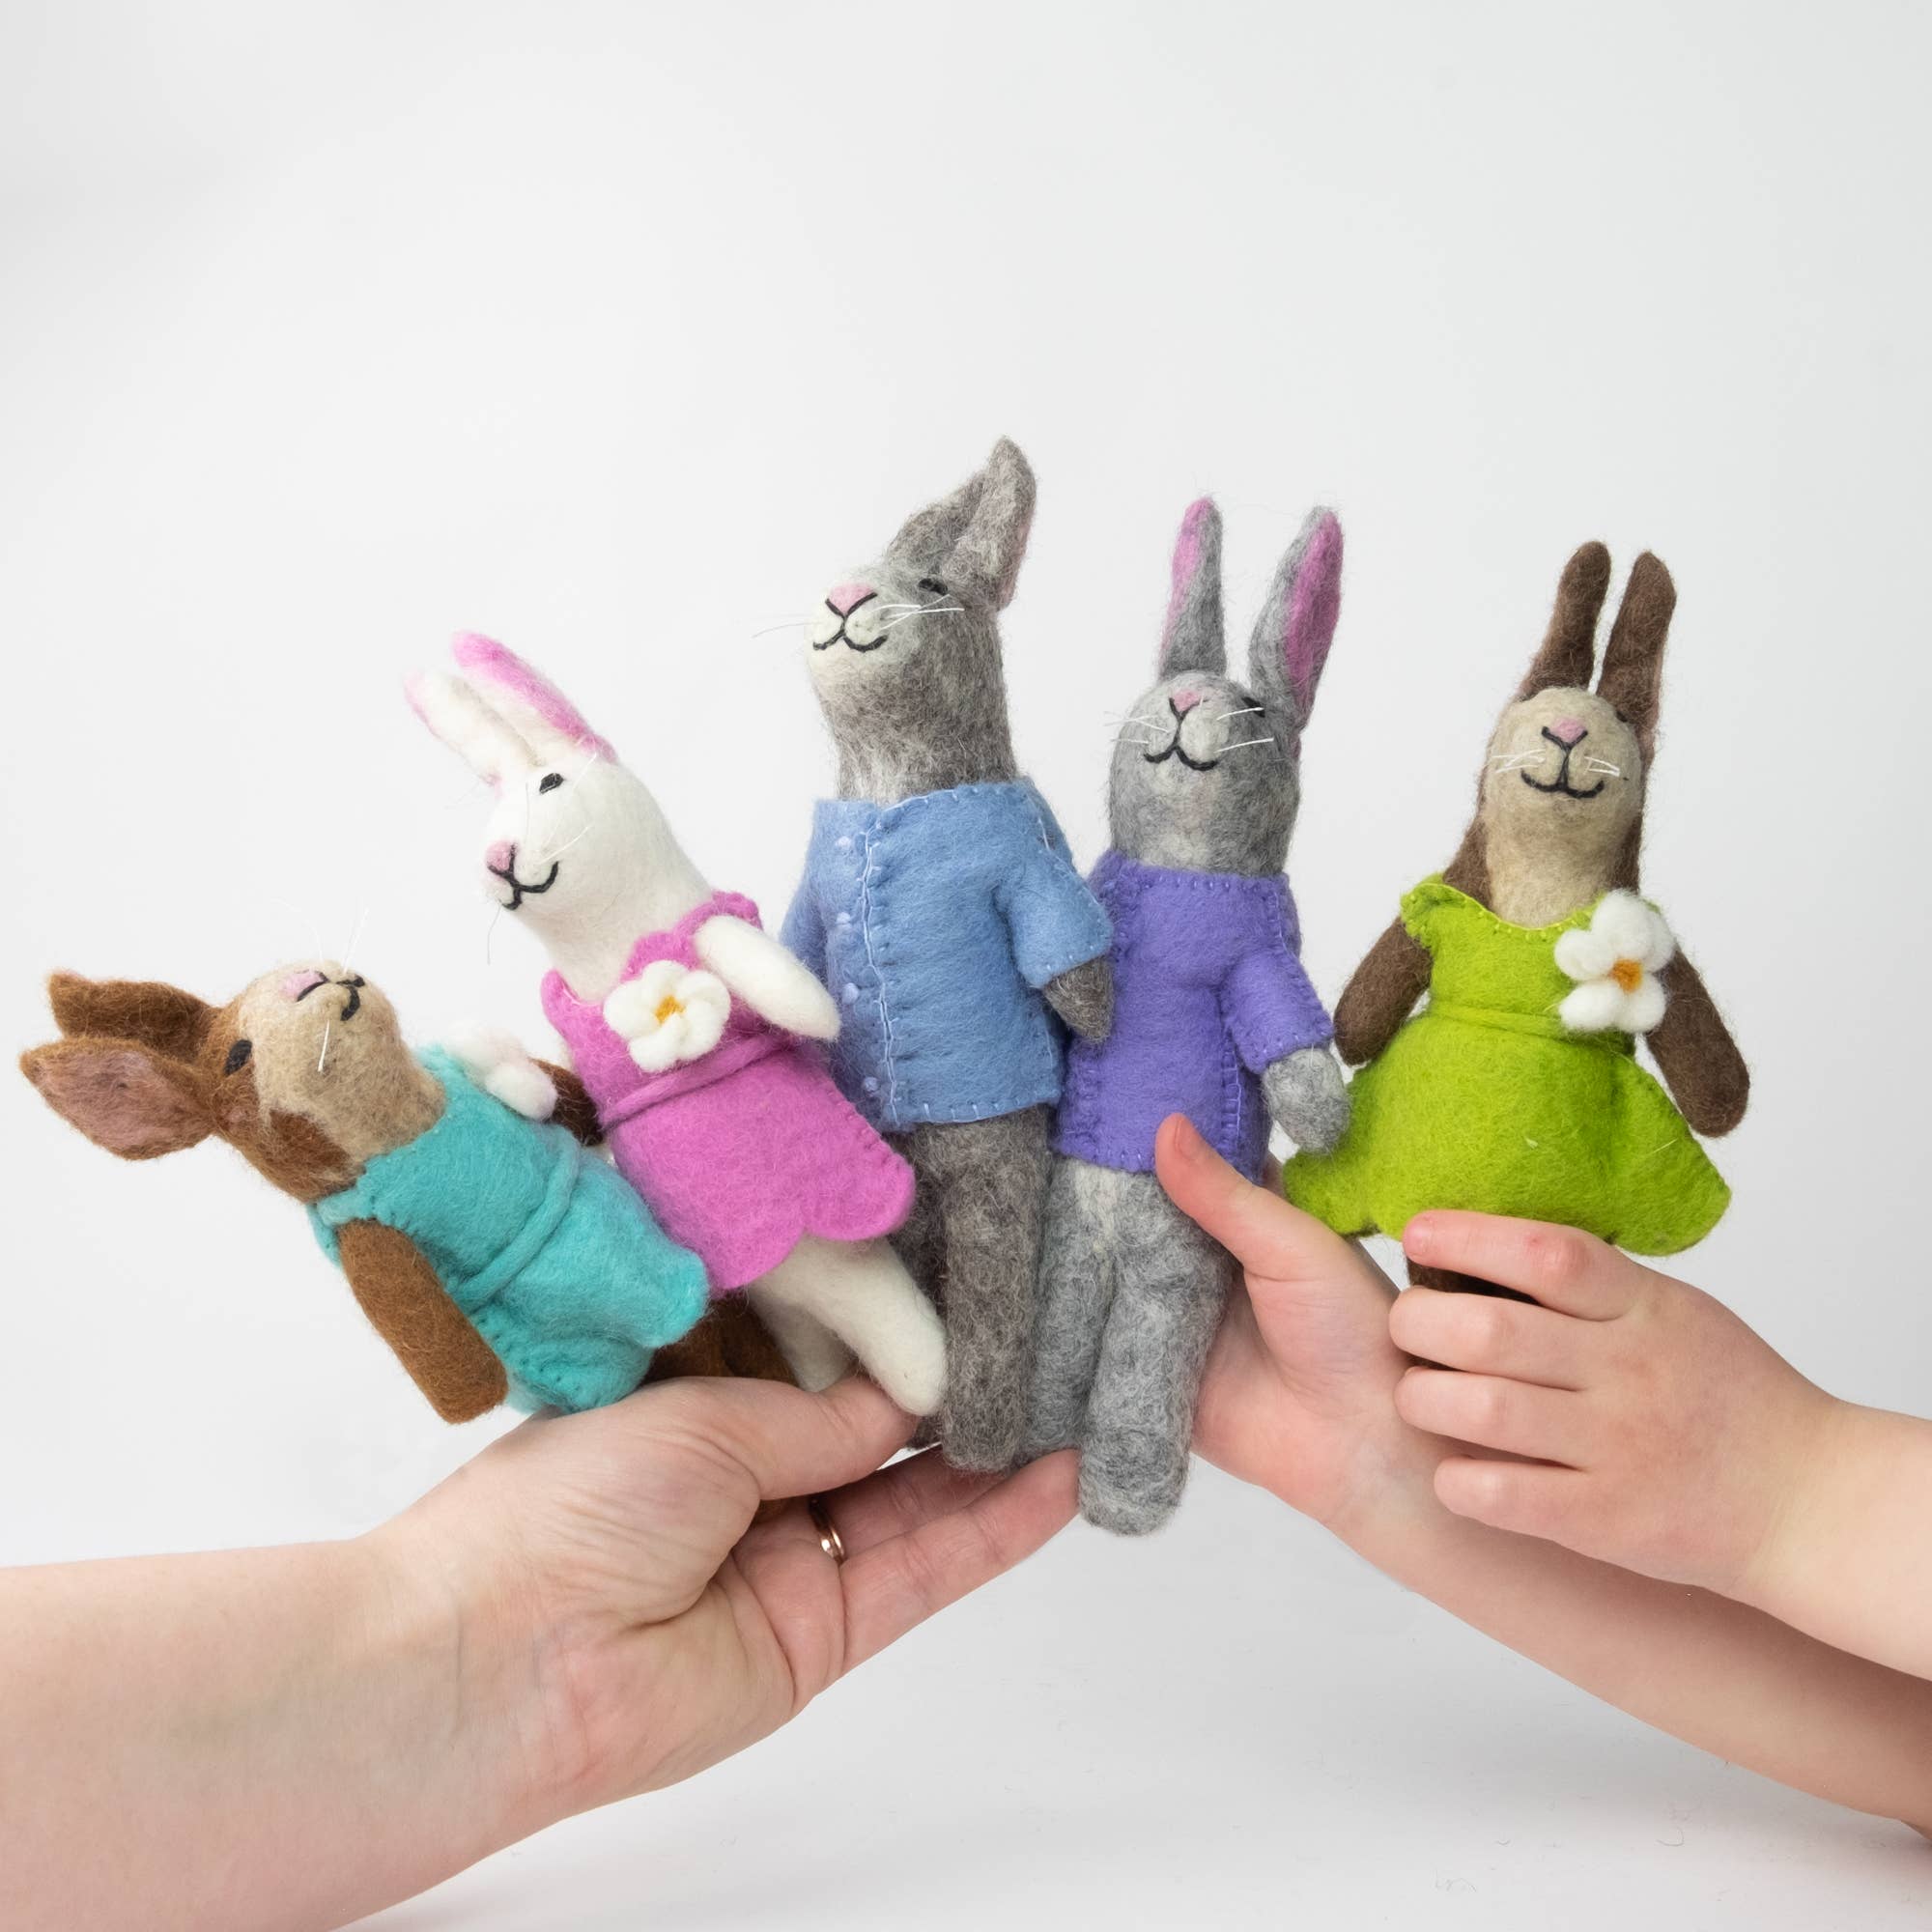 Felt Easter Bunny Dolls